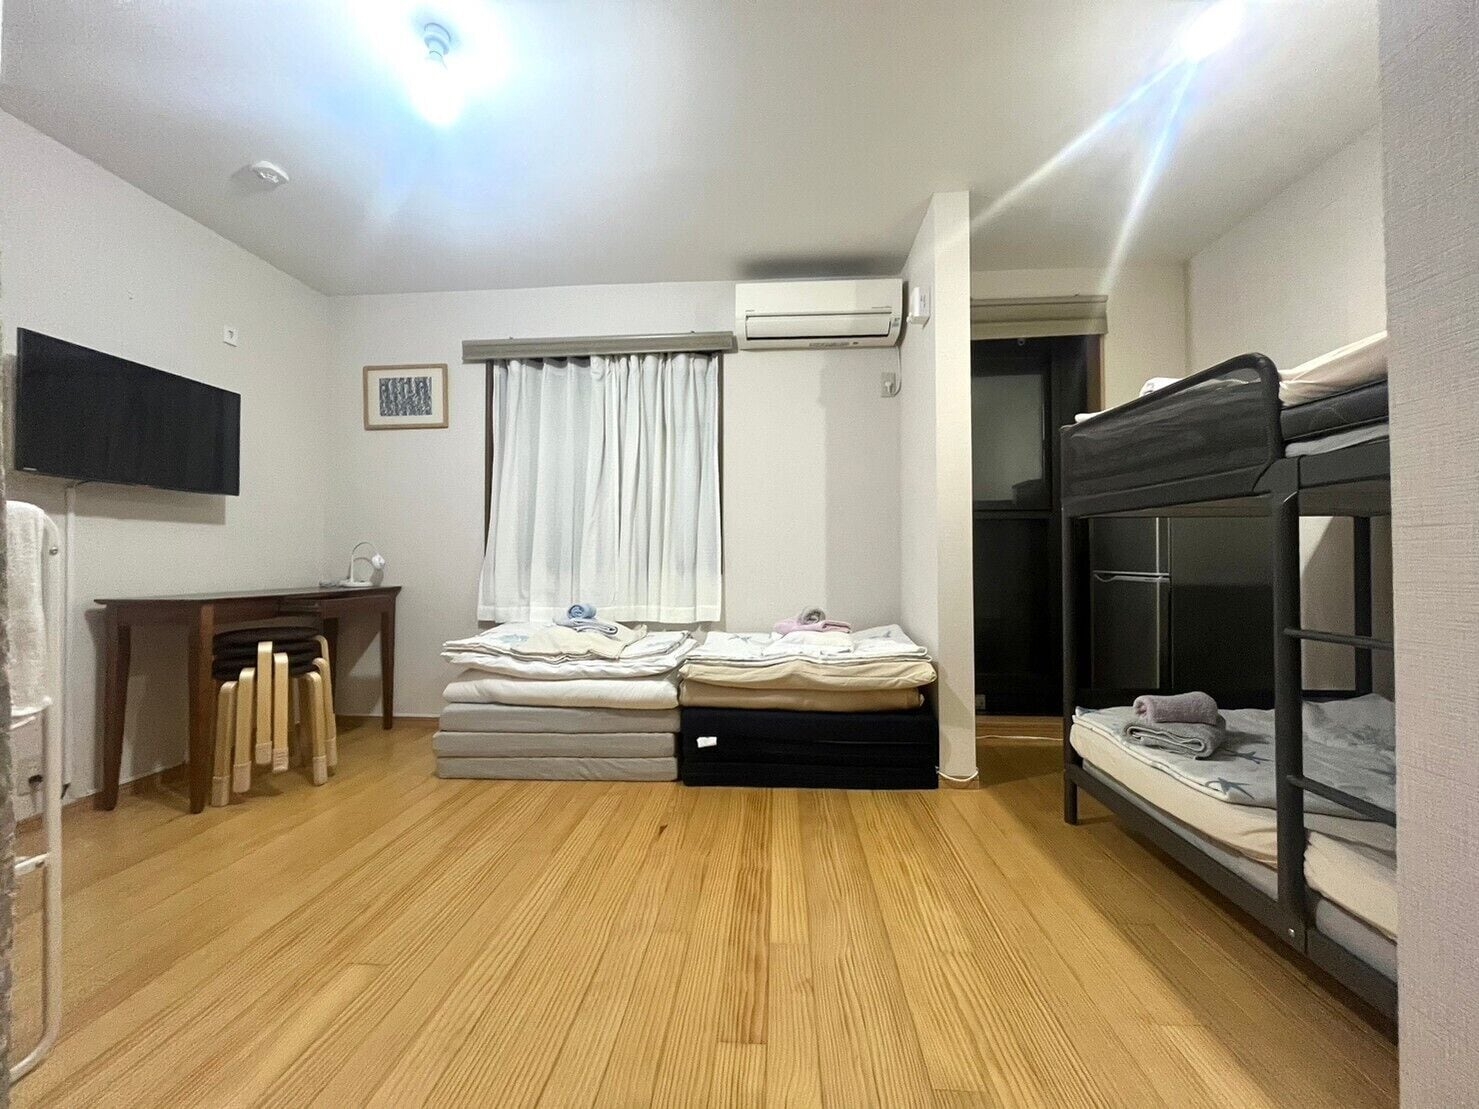 Bedroom 3, Sadie's Home, Kawasaki